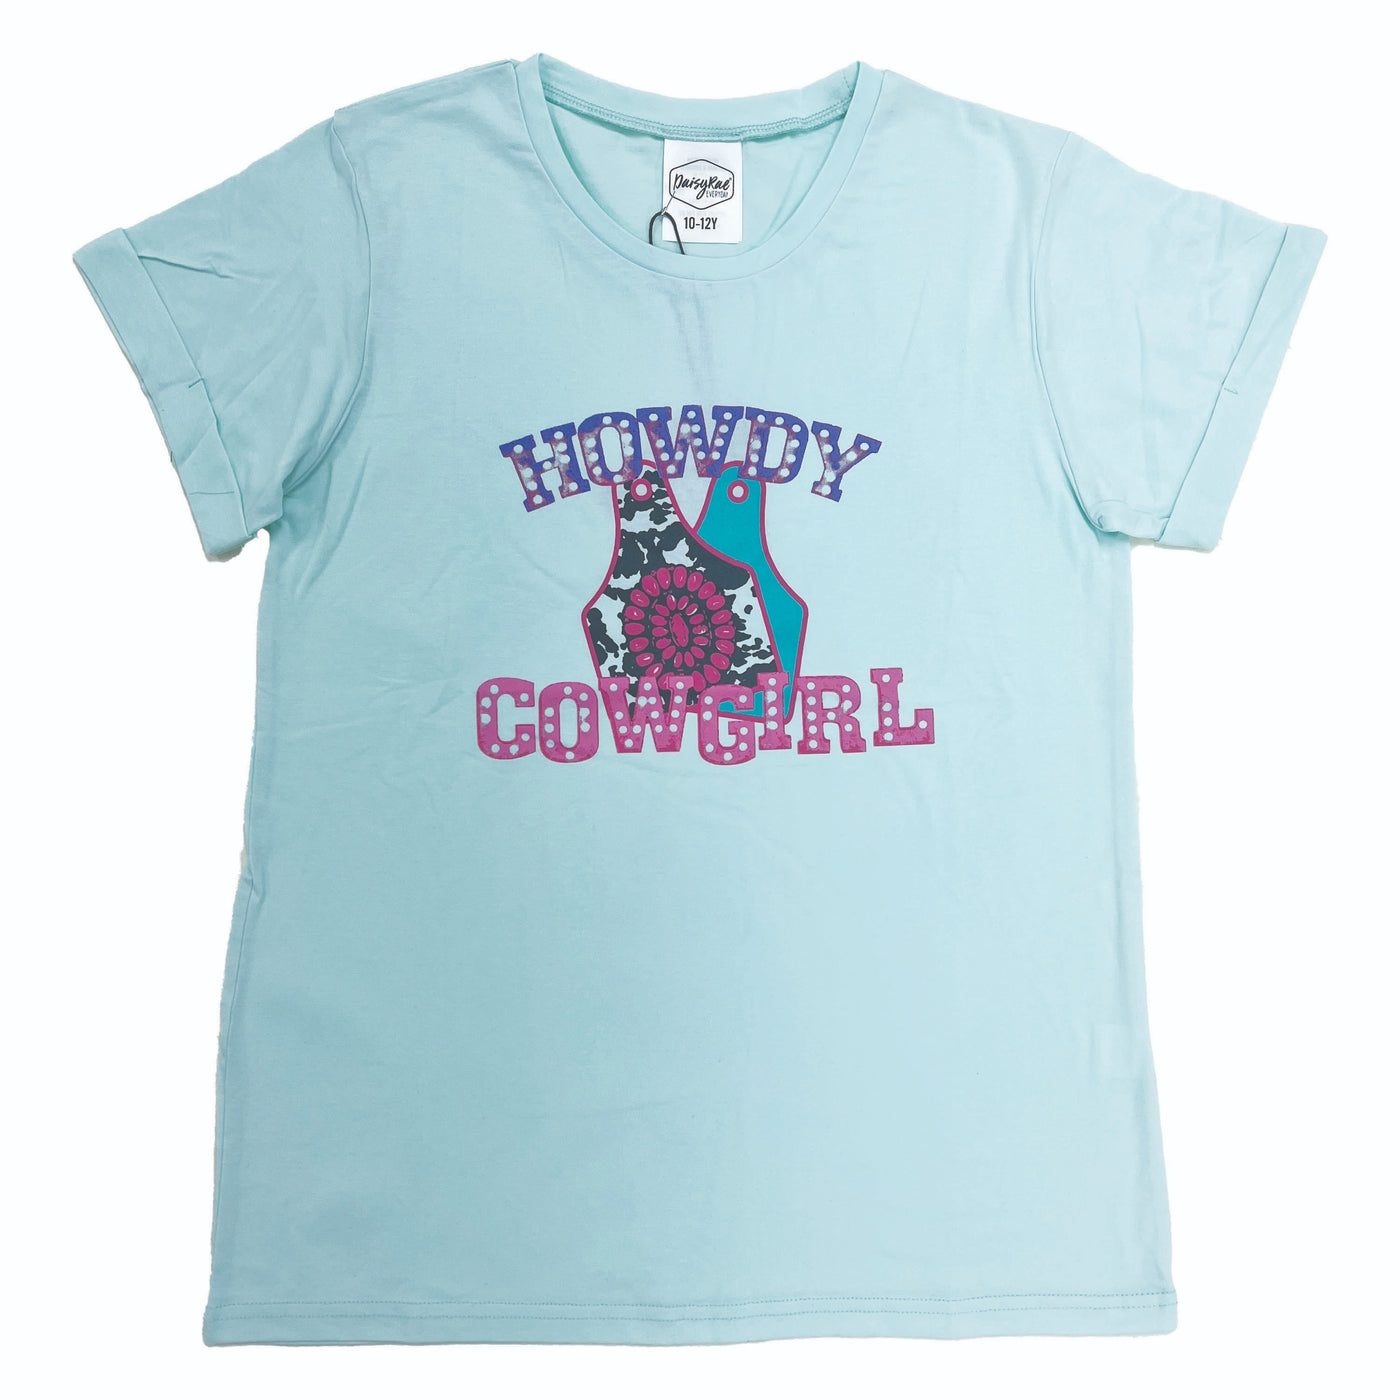 Girls' Howdy Cowgirl on Mint Cuff Tee